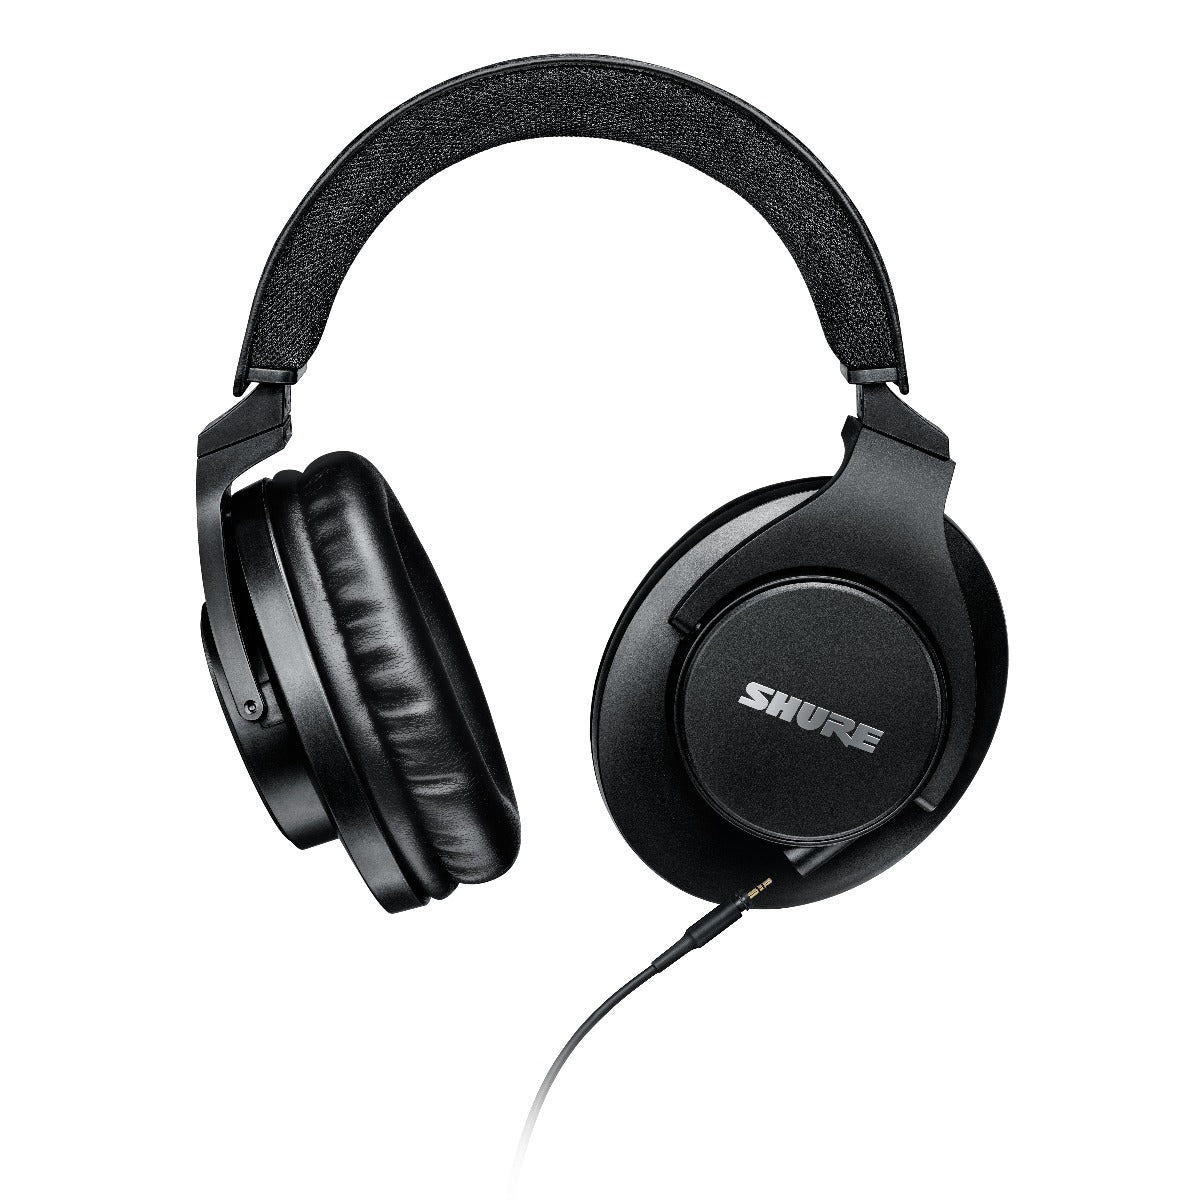 Shure SRH440A Professional Studio Headphones, View 3